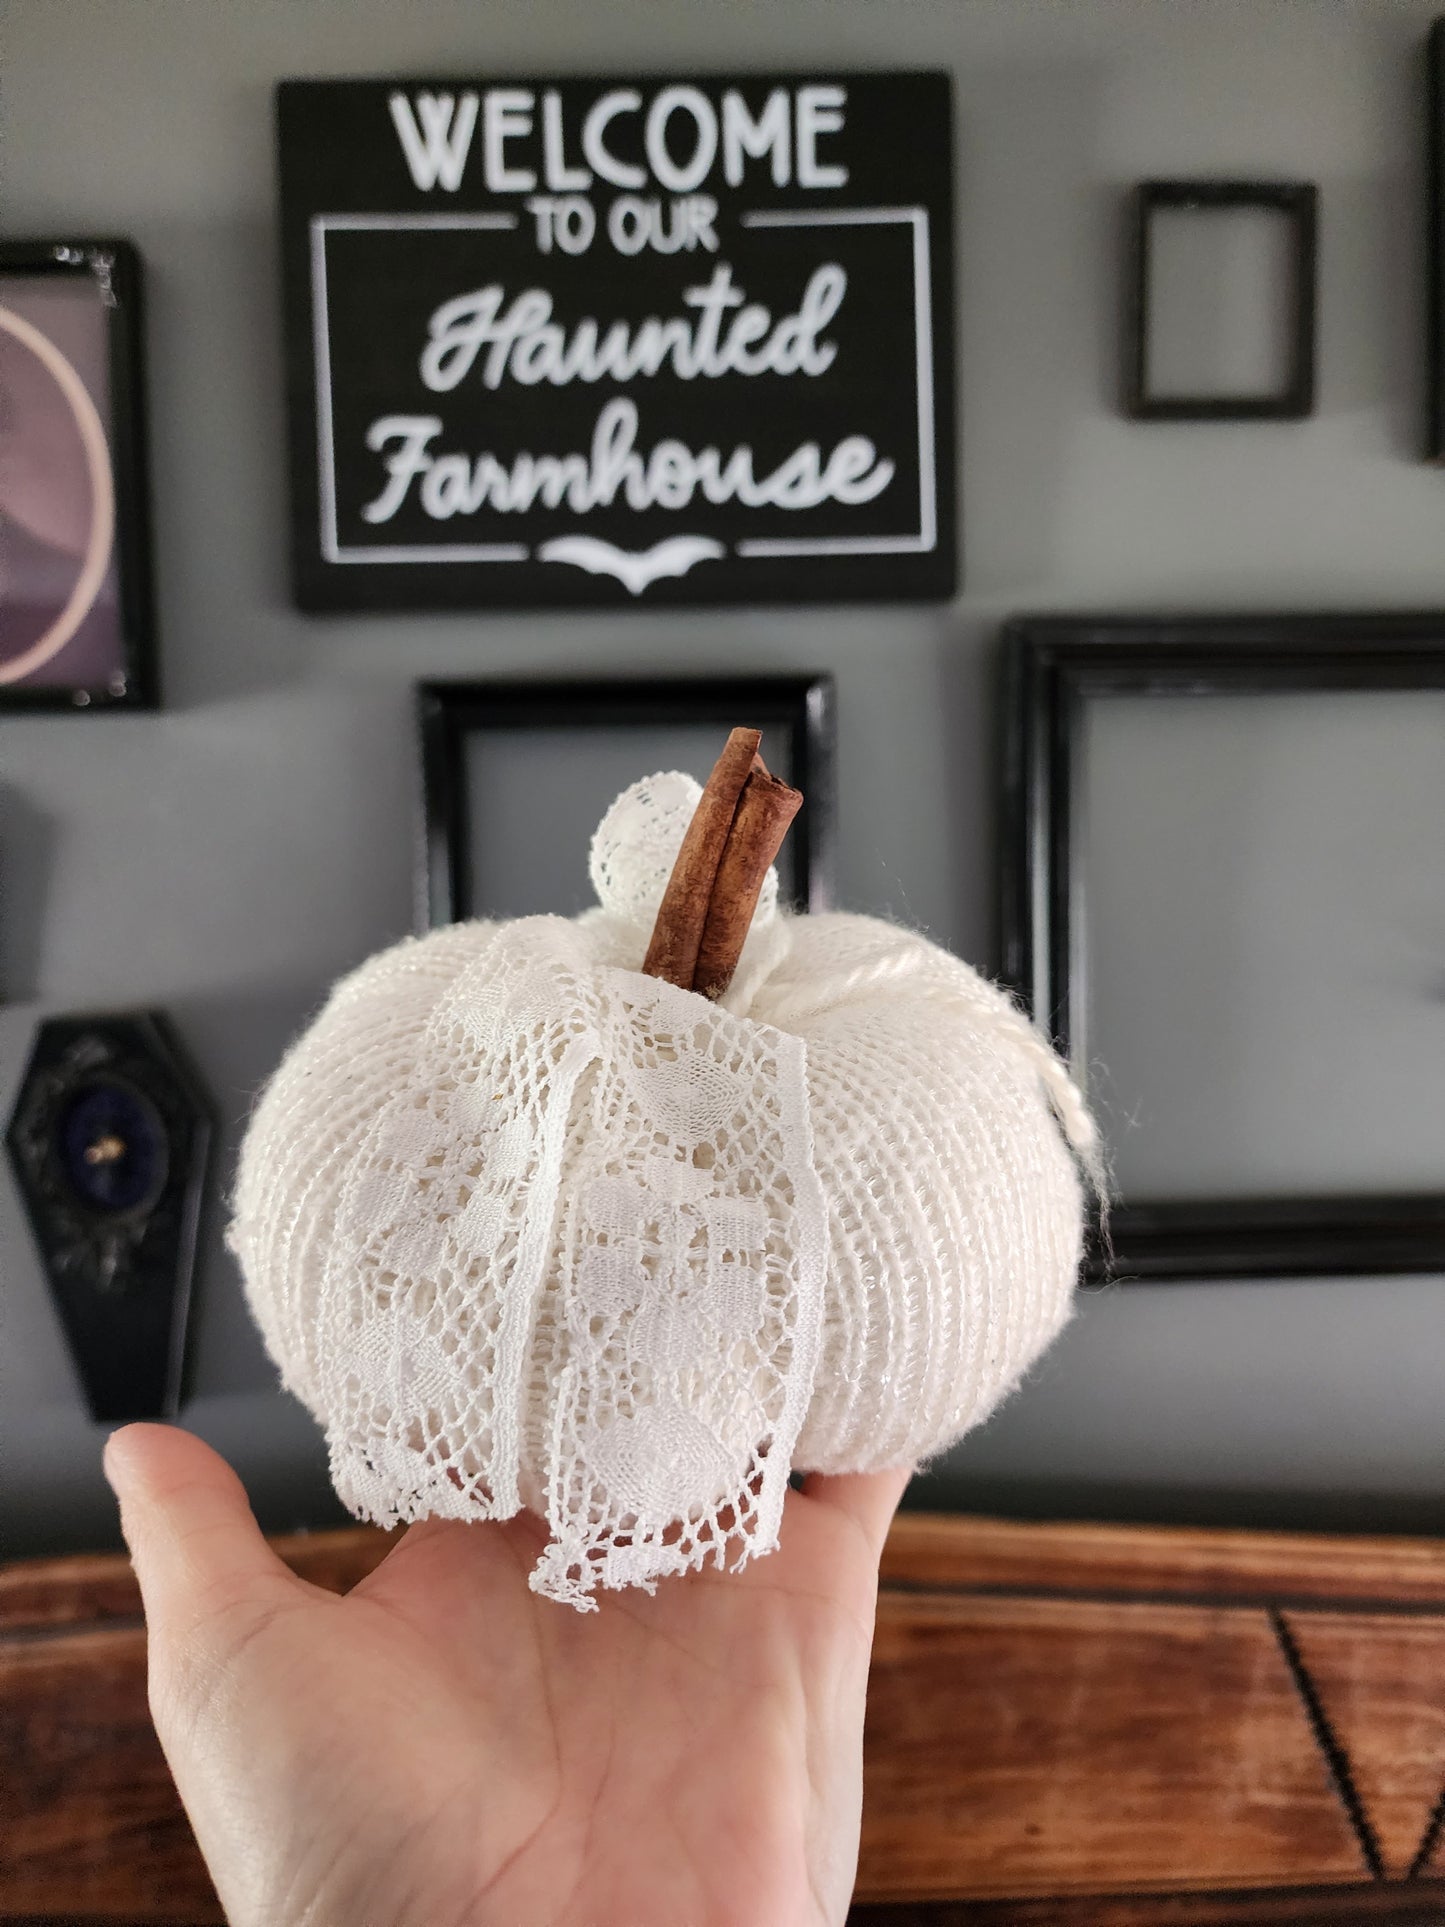 Creamy White Knit Pumpkin PIllow Pouf with Vintage Lace And Cinnamon Stick Stem